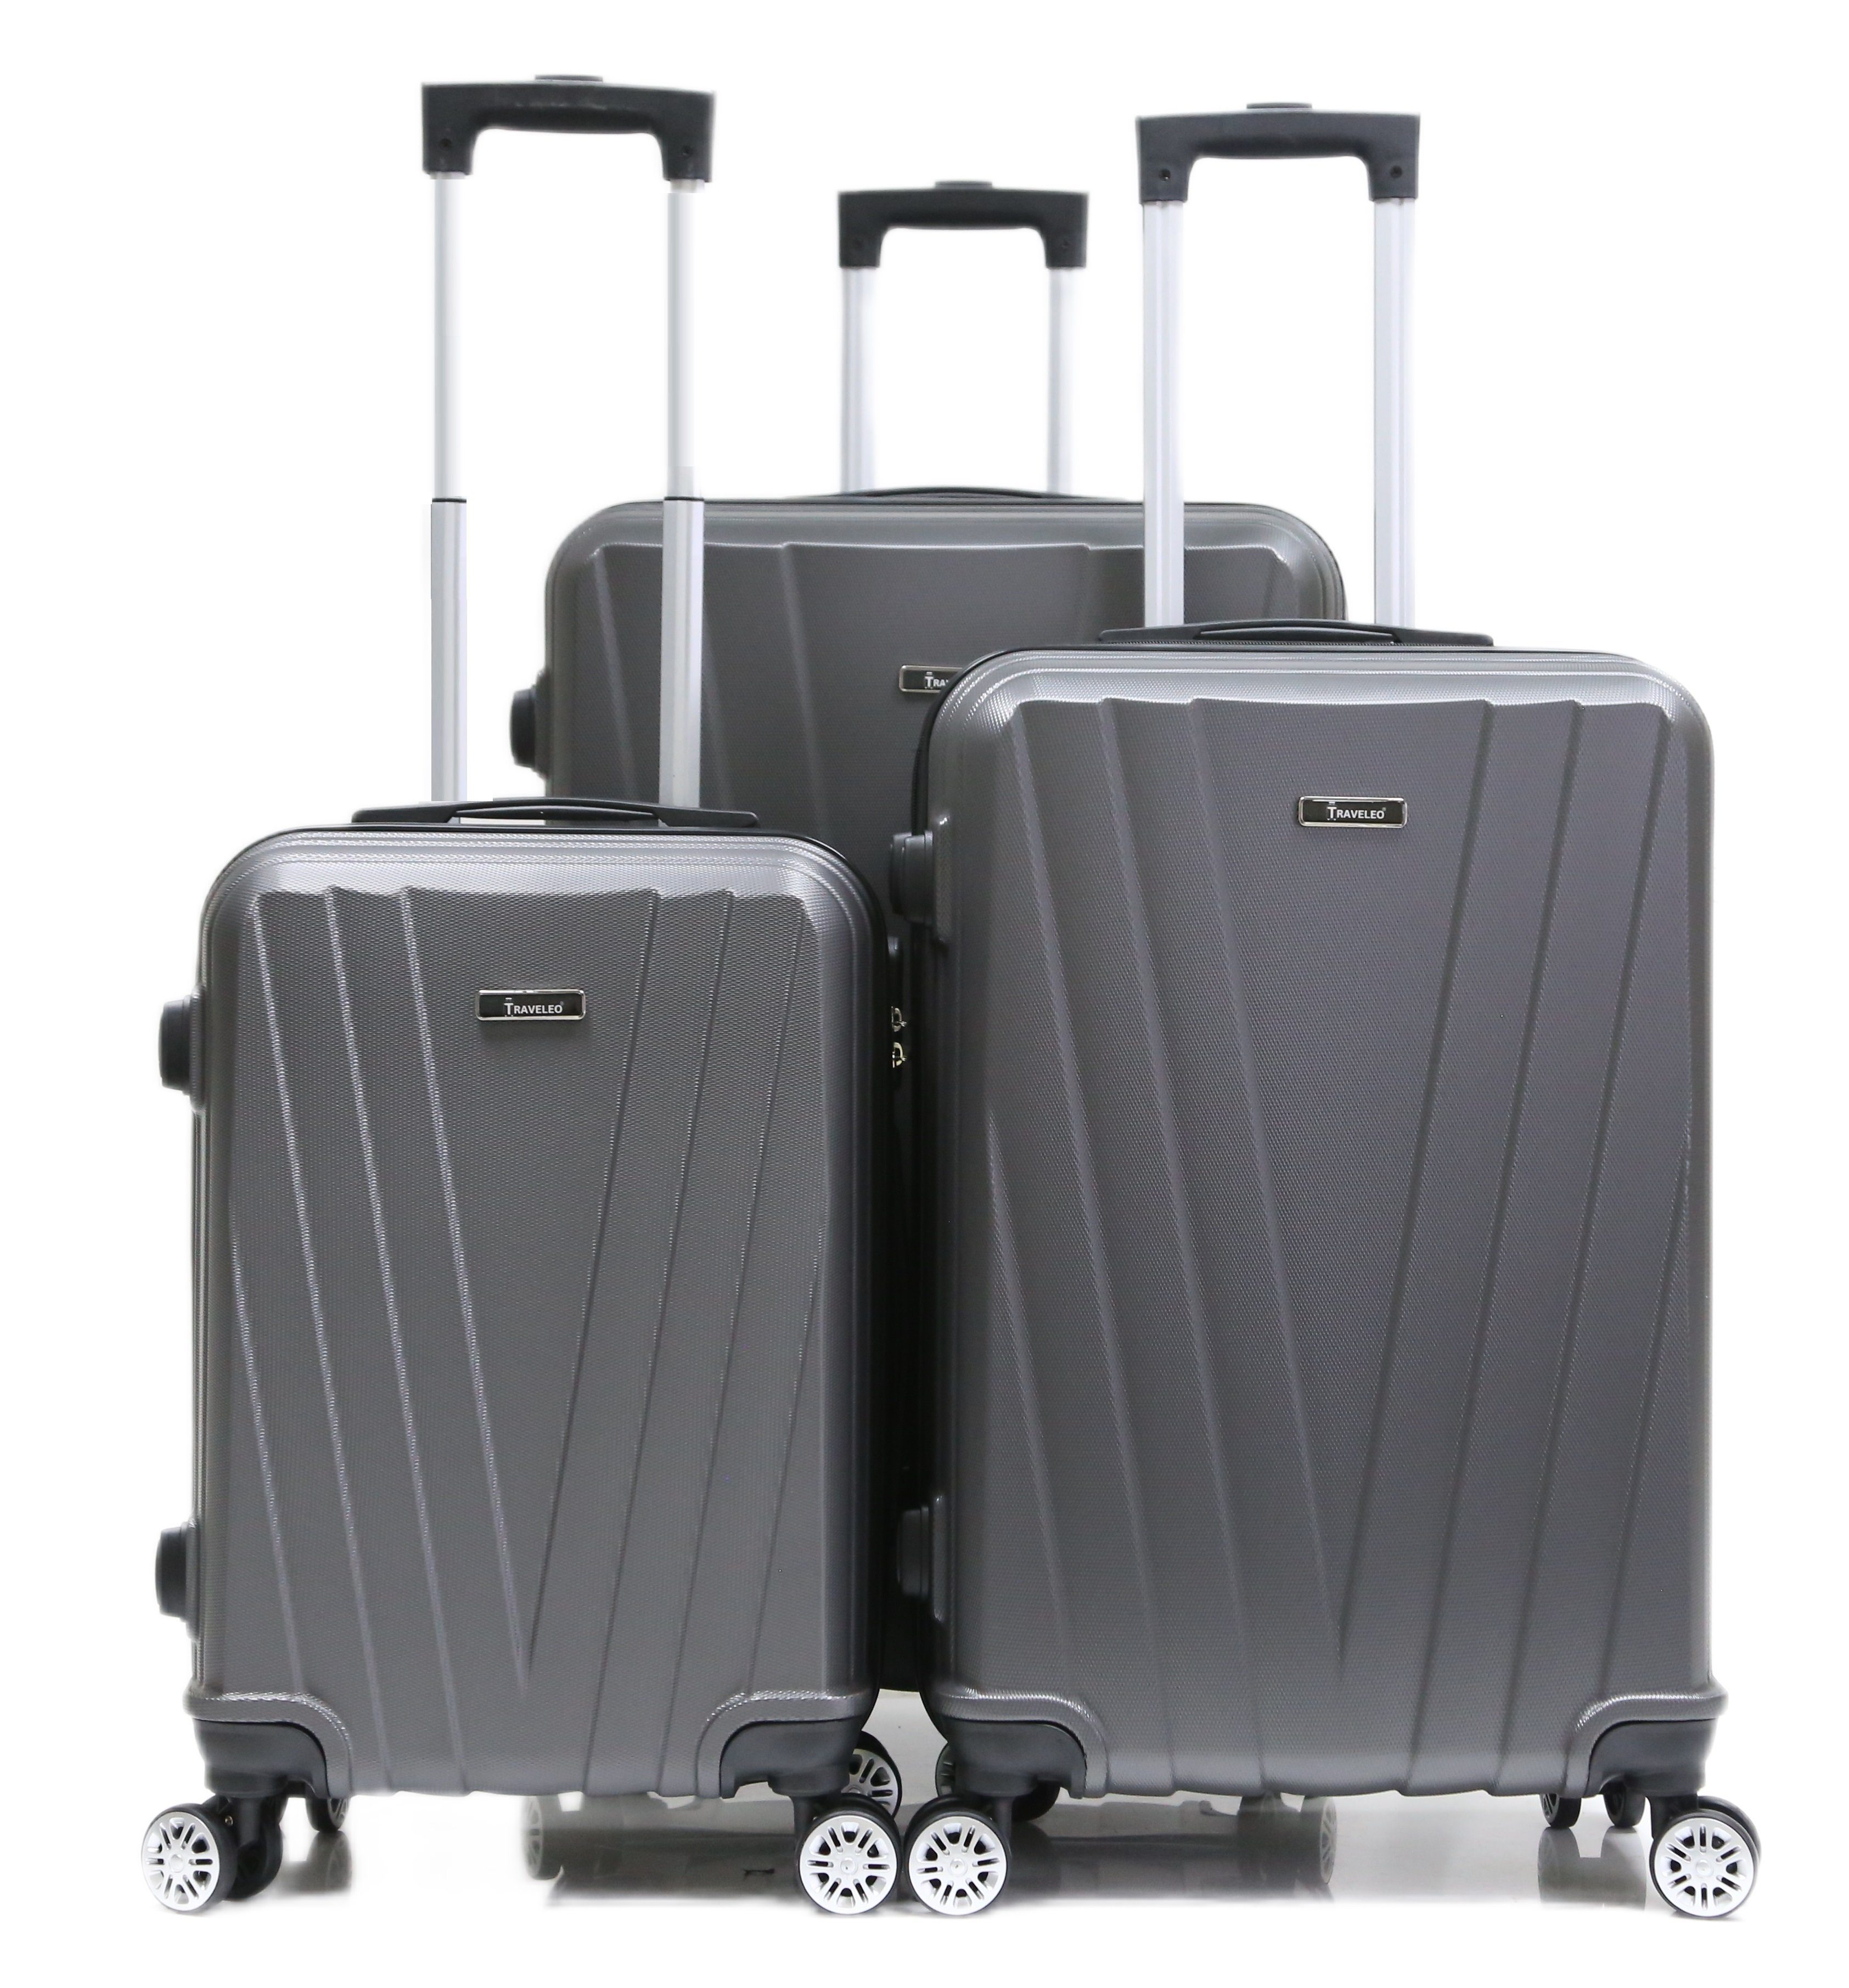 Super beliebt, hohe Qualität garantiert Cheffinger Koffer 3 tlg Set ABS-06 Hartschale Trolley Kofferset Handgepäck Grau